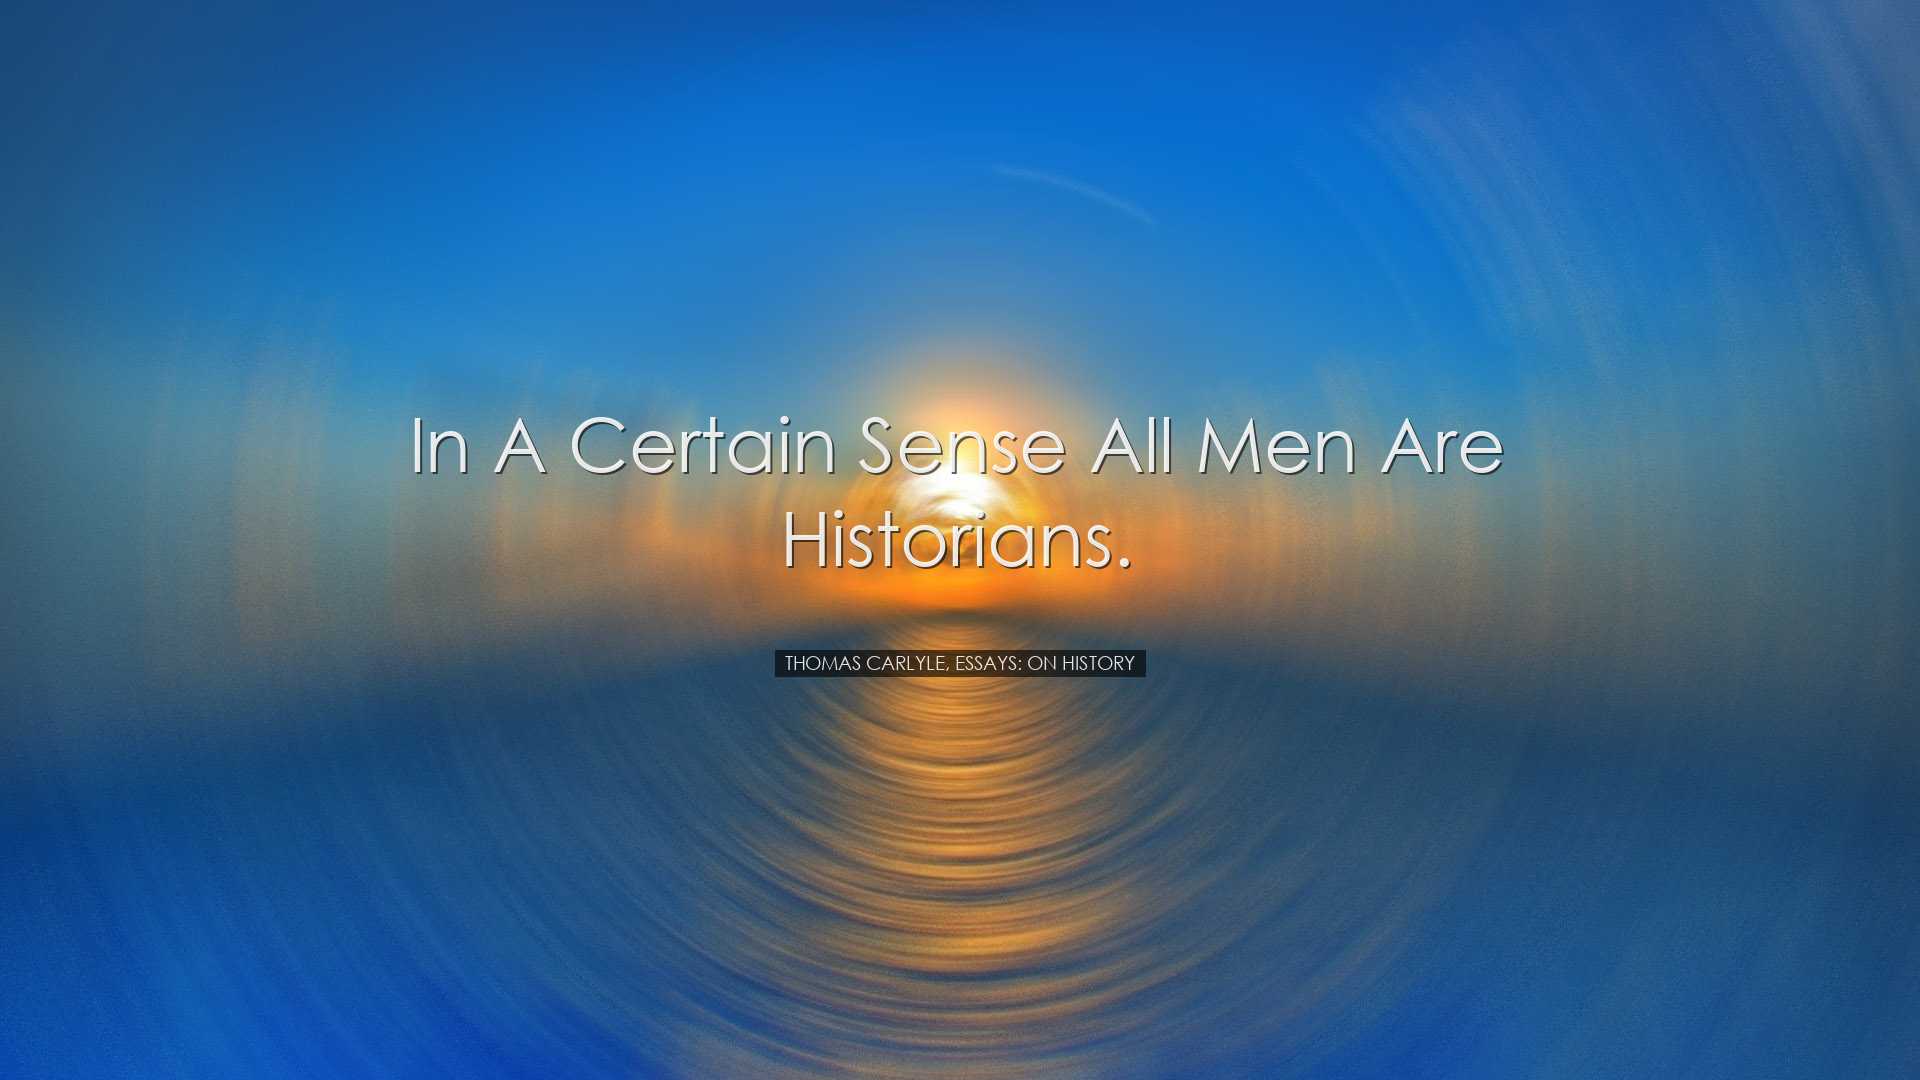 In a certain sense all men are historians. - Thomas Carlyle, Essay